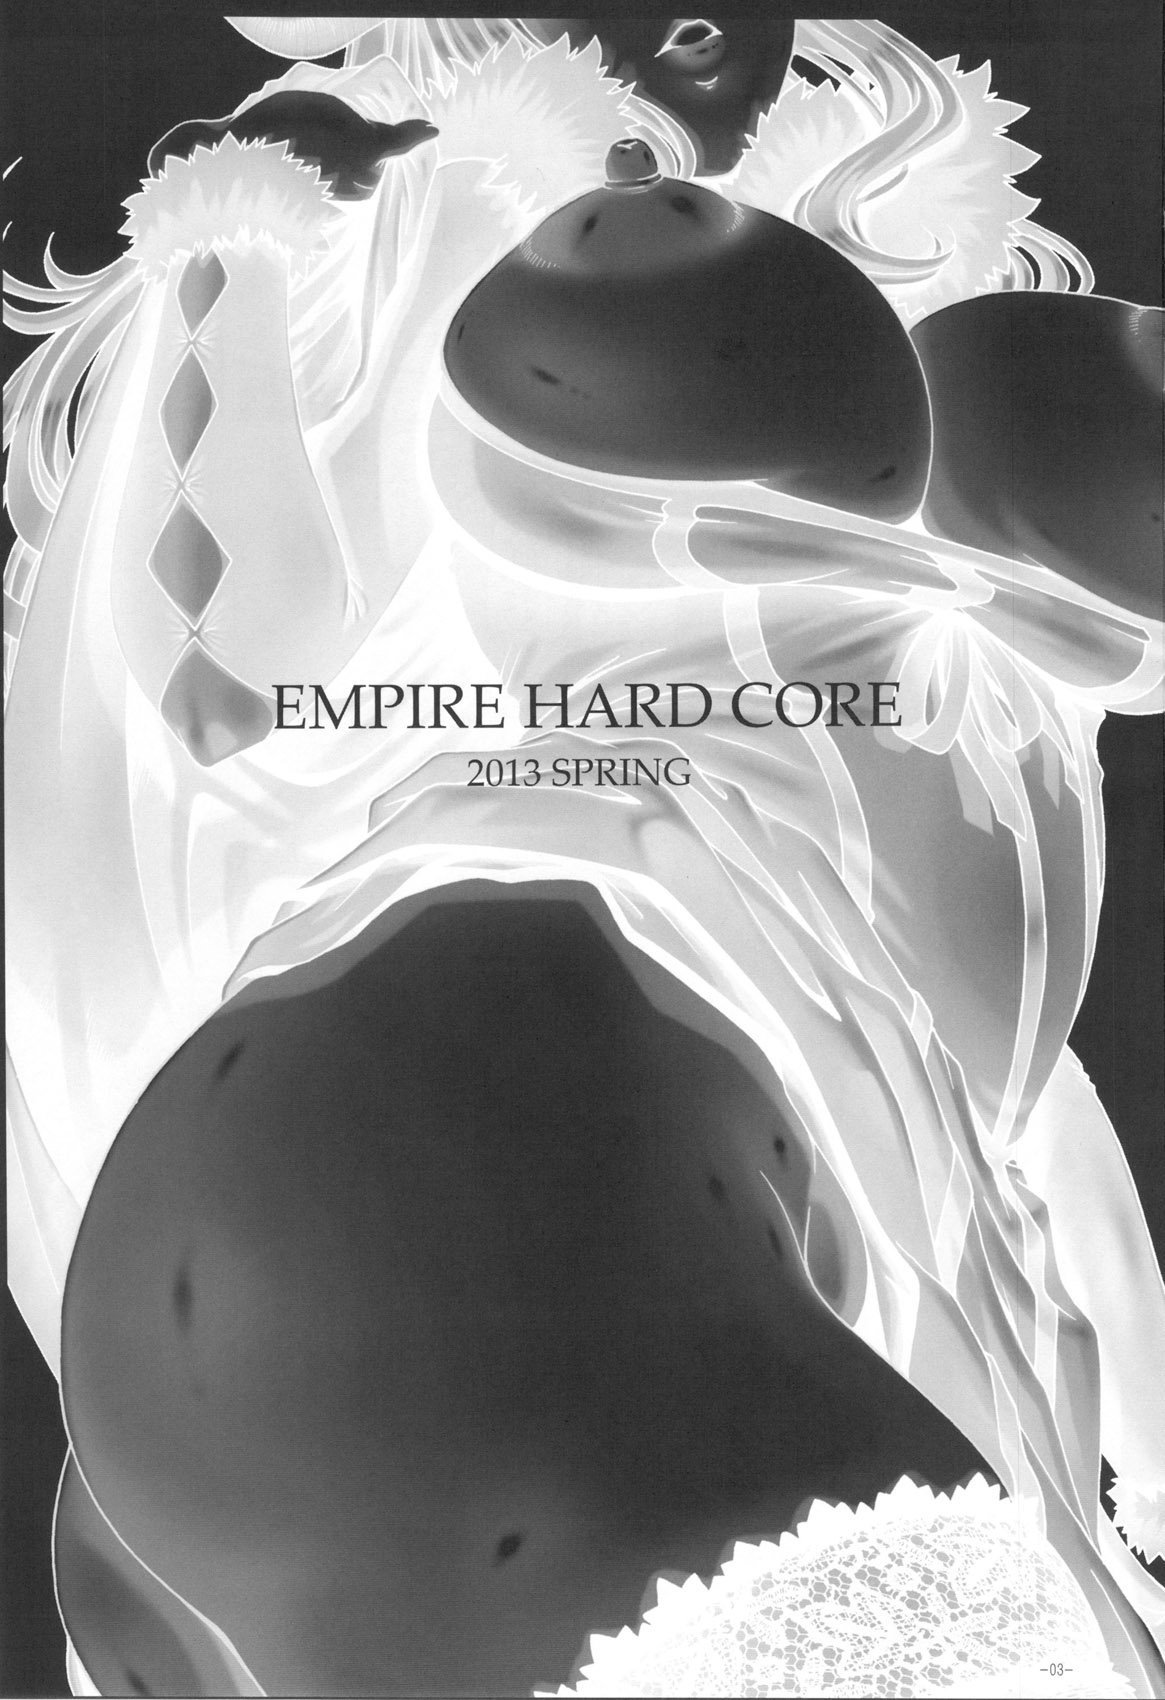 EMPIRE HARD CORE 2013 SPRING - 2